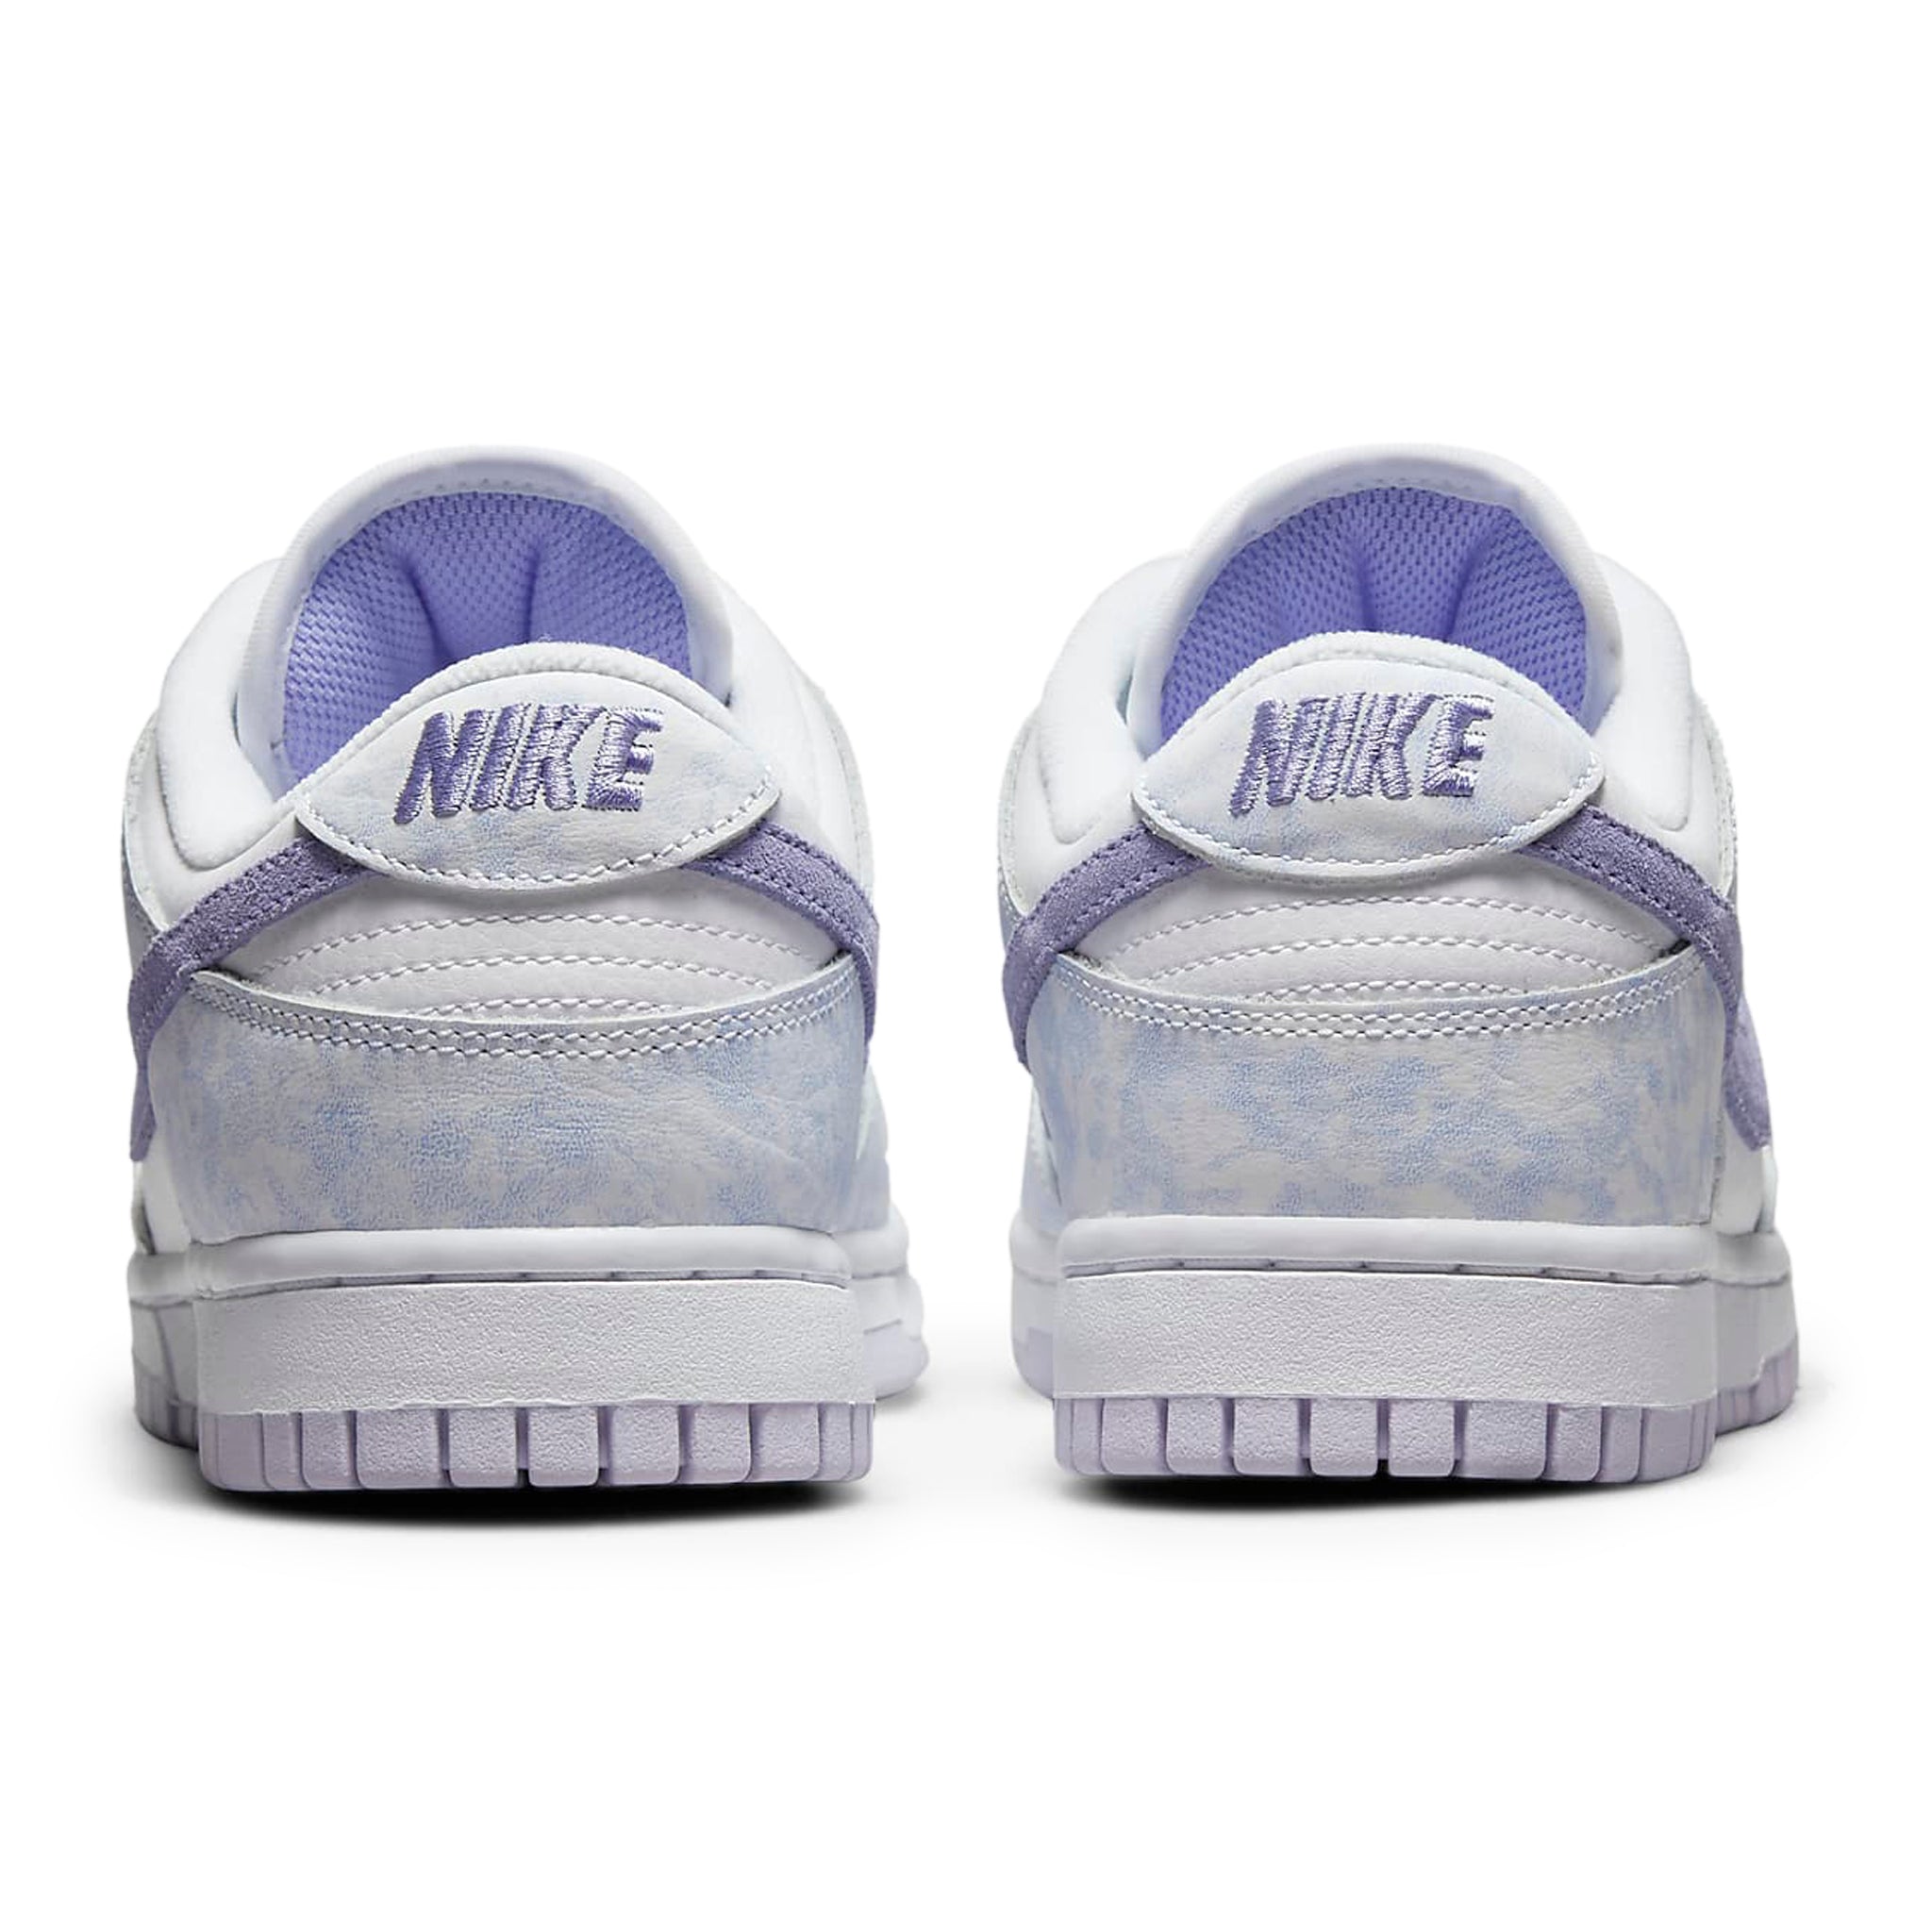 Heel view of Nike Dunk Low Purple Pulse DM9467-500